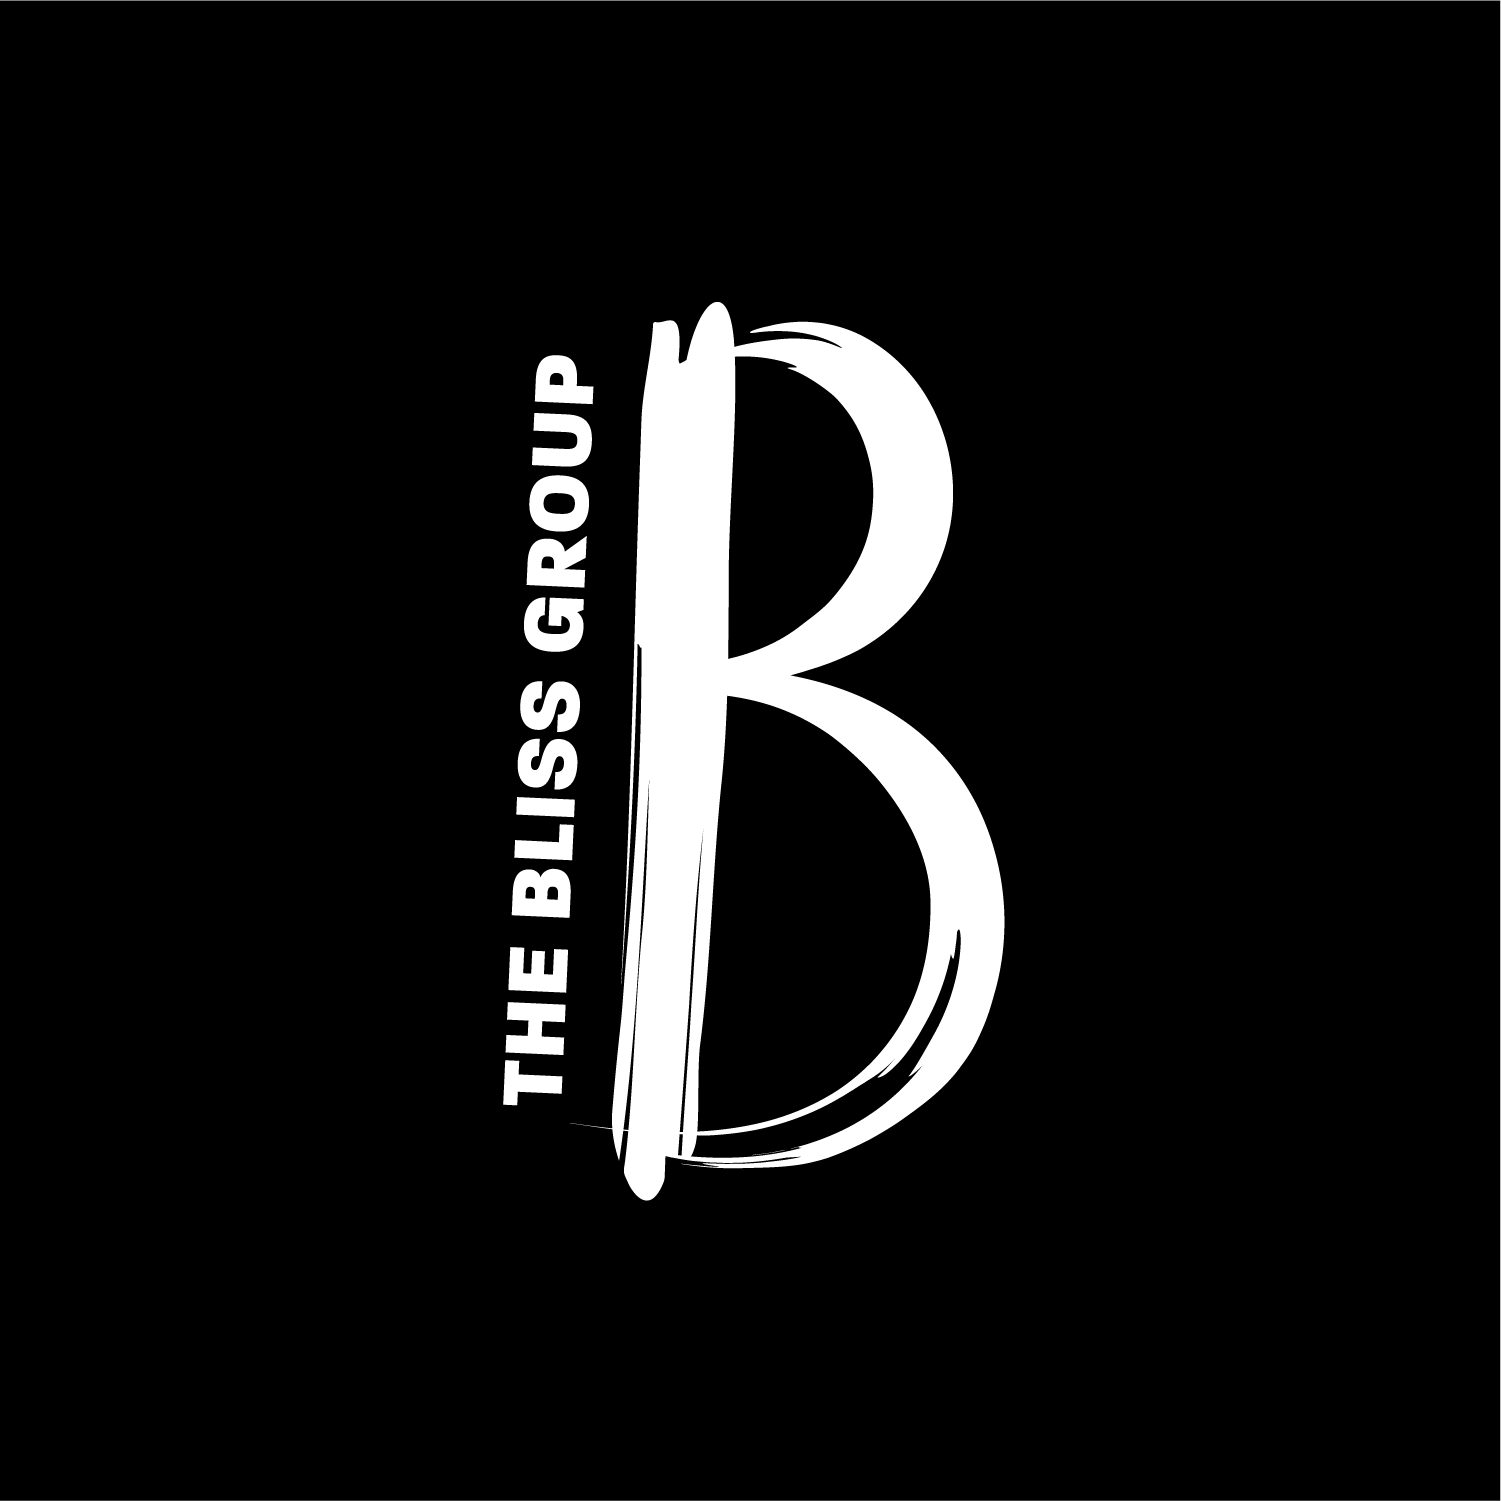 TBG_LOGOS_rgb_full logo_colorblock_Black